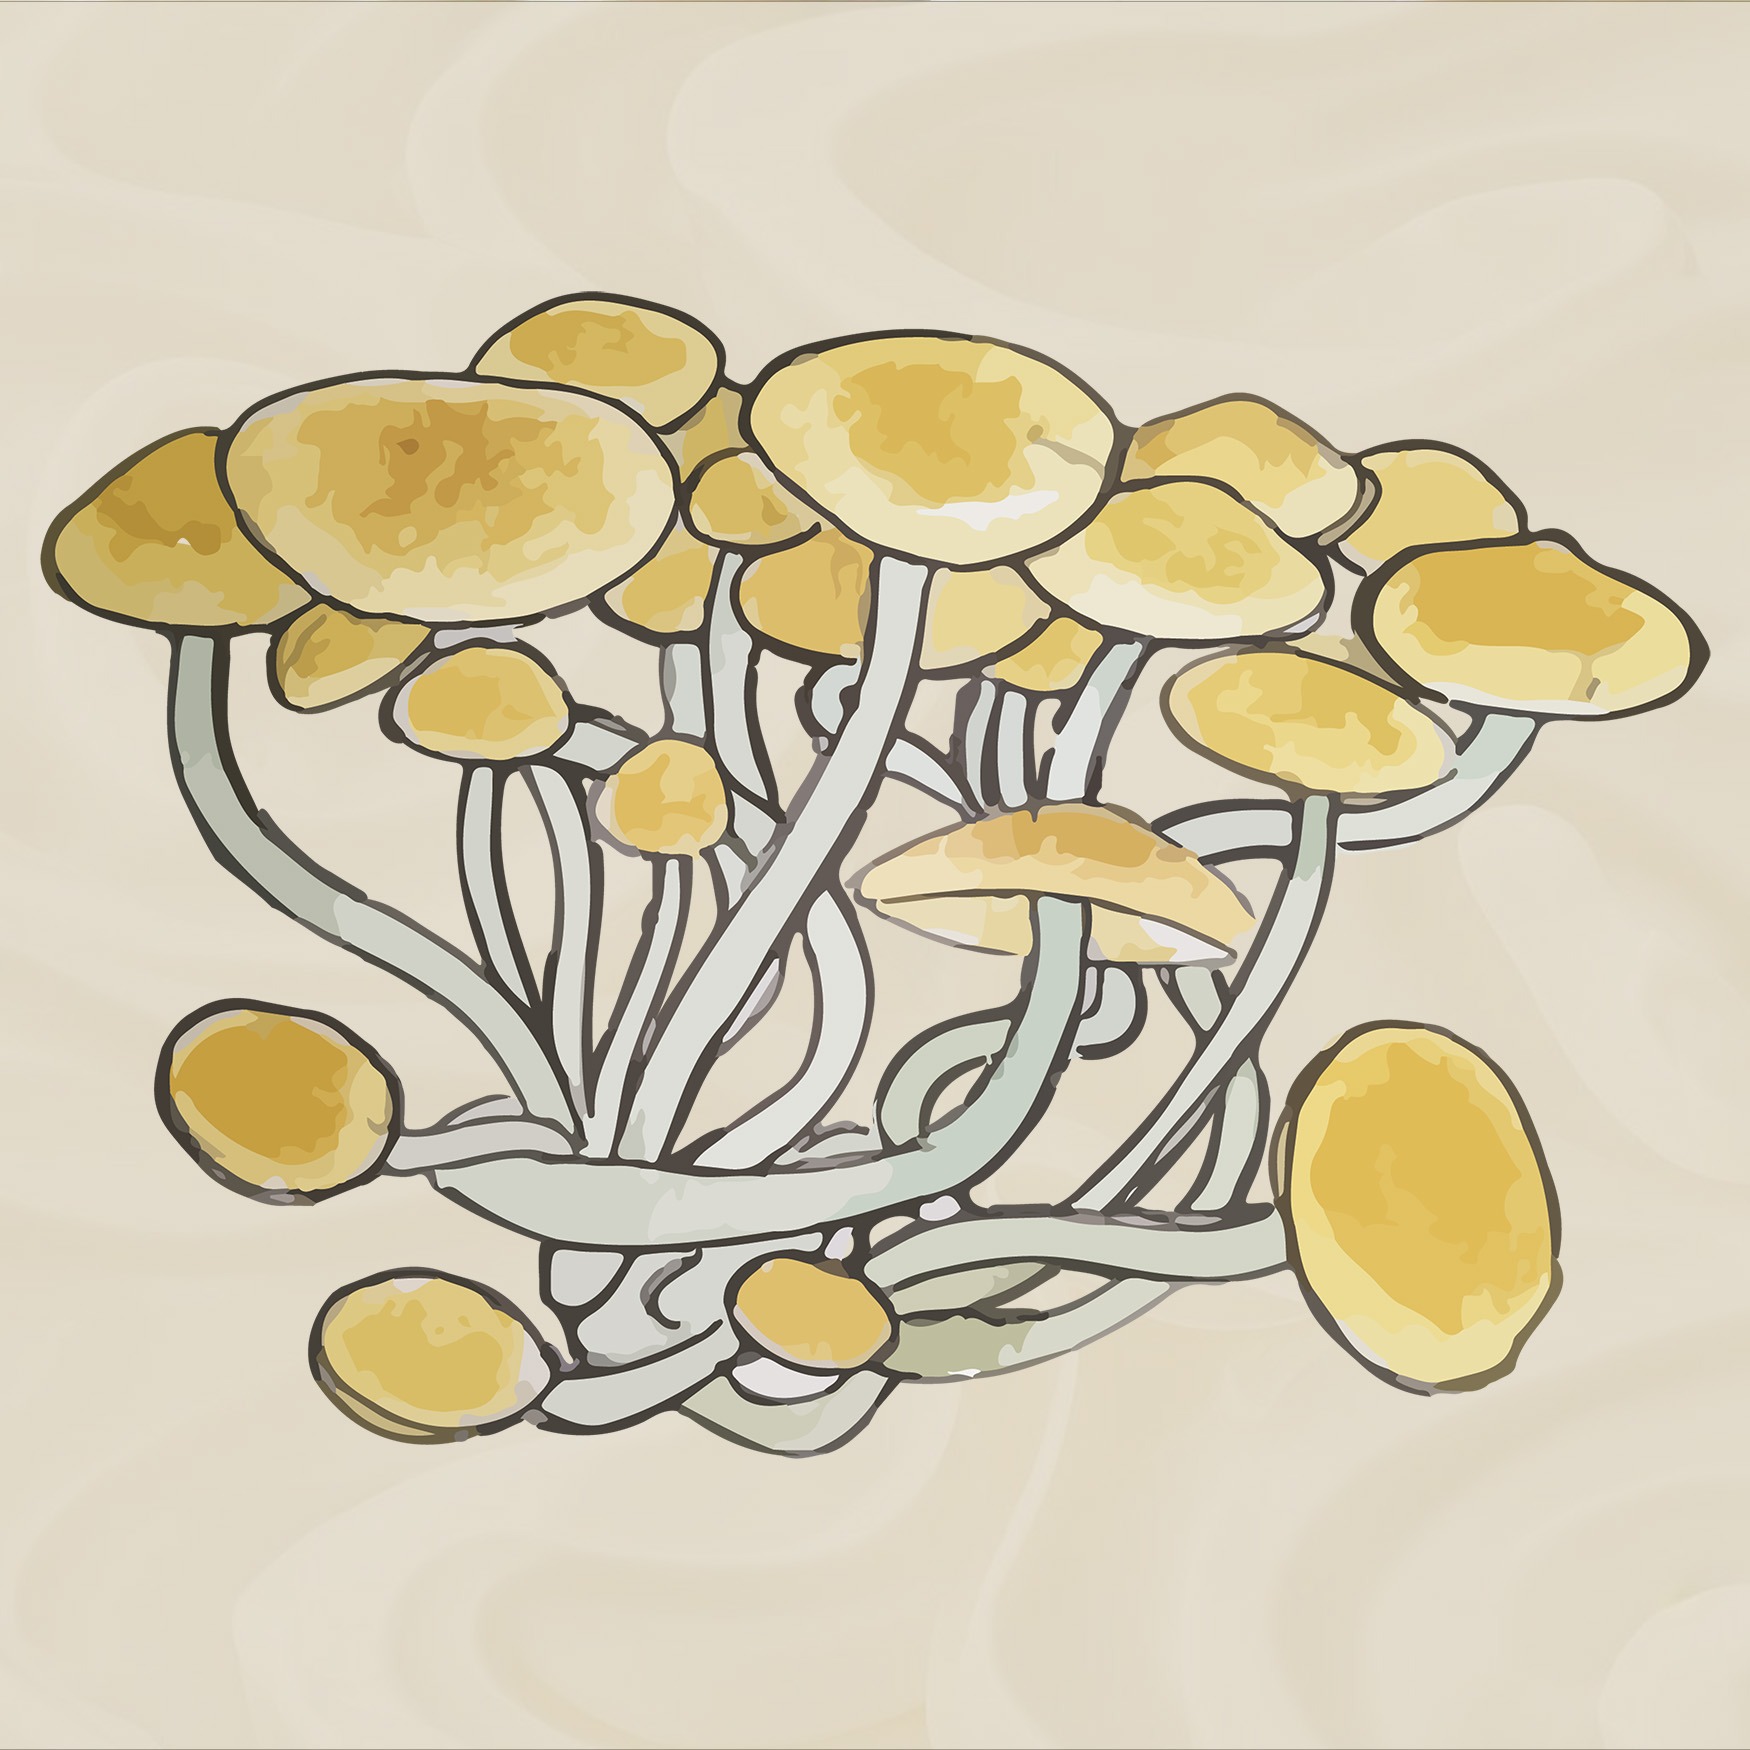 growkit golden teacher growbox mushroom